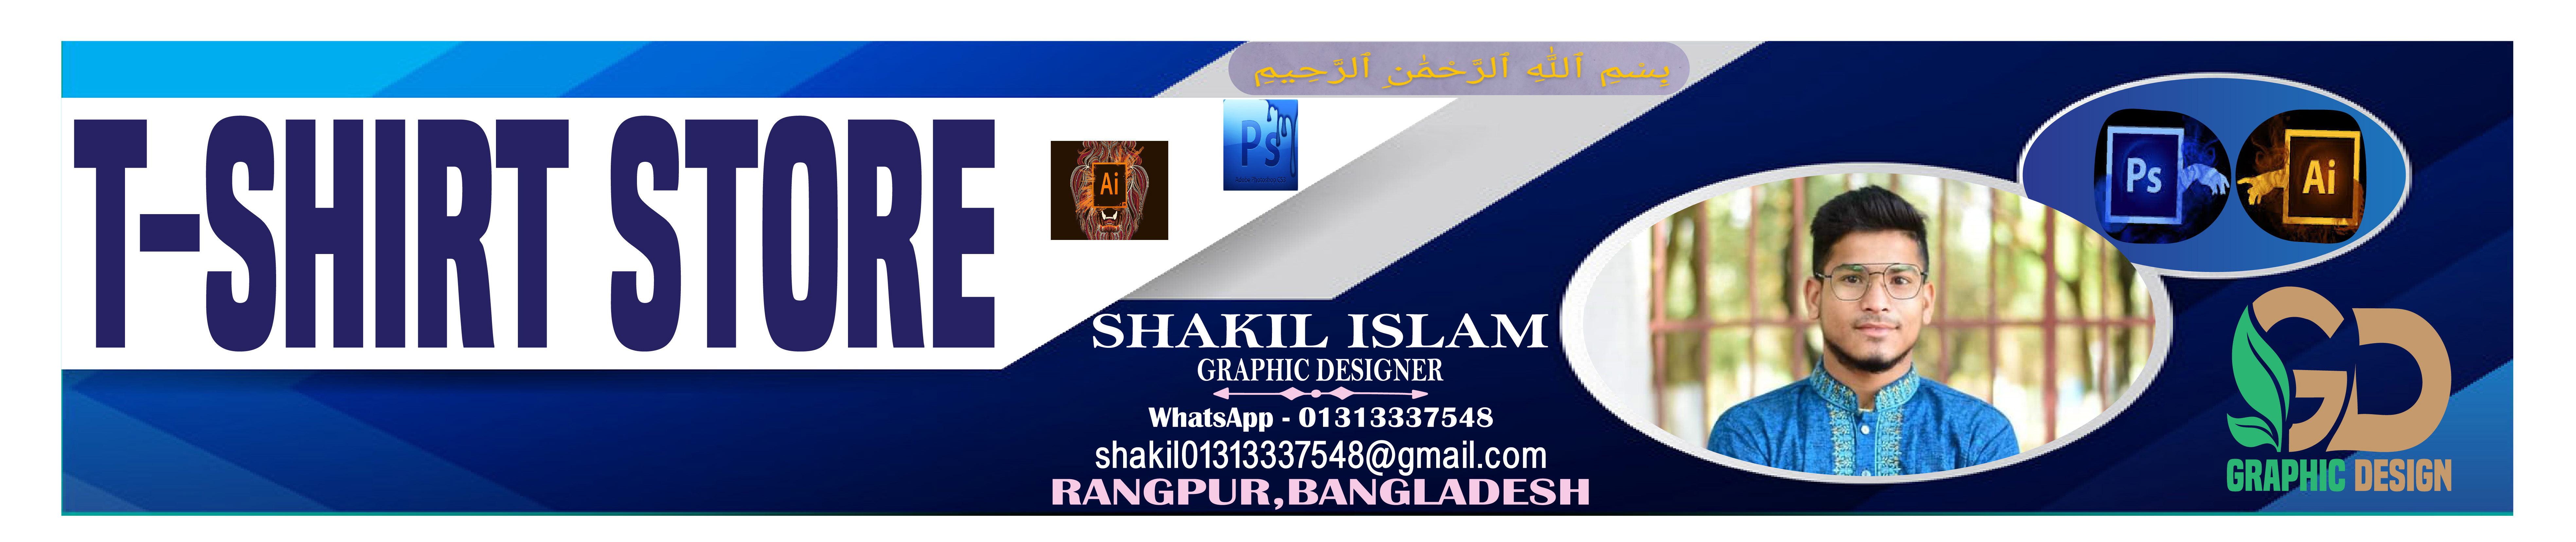 SHAKIL ISLAMs profilbanner